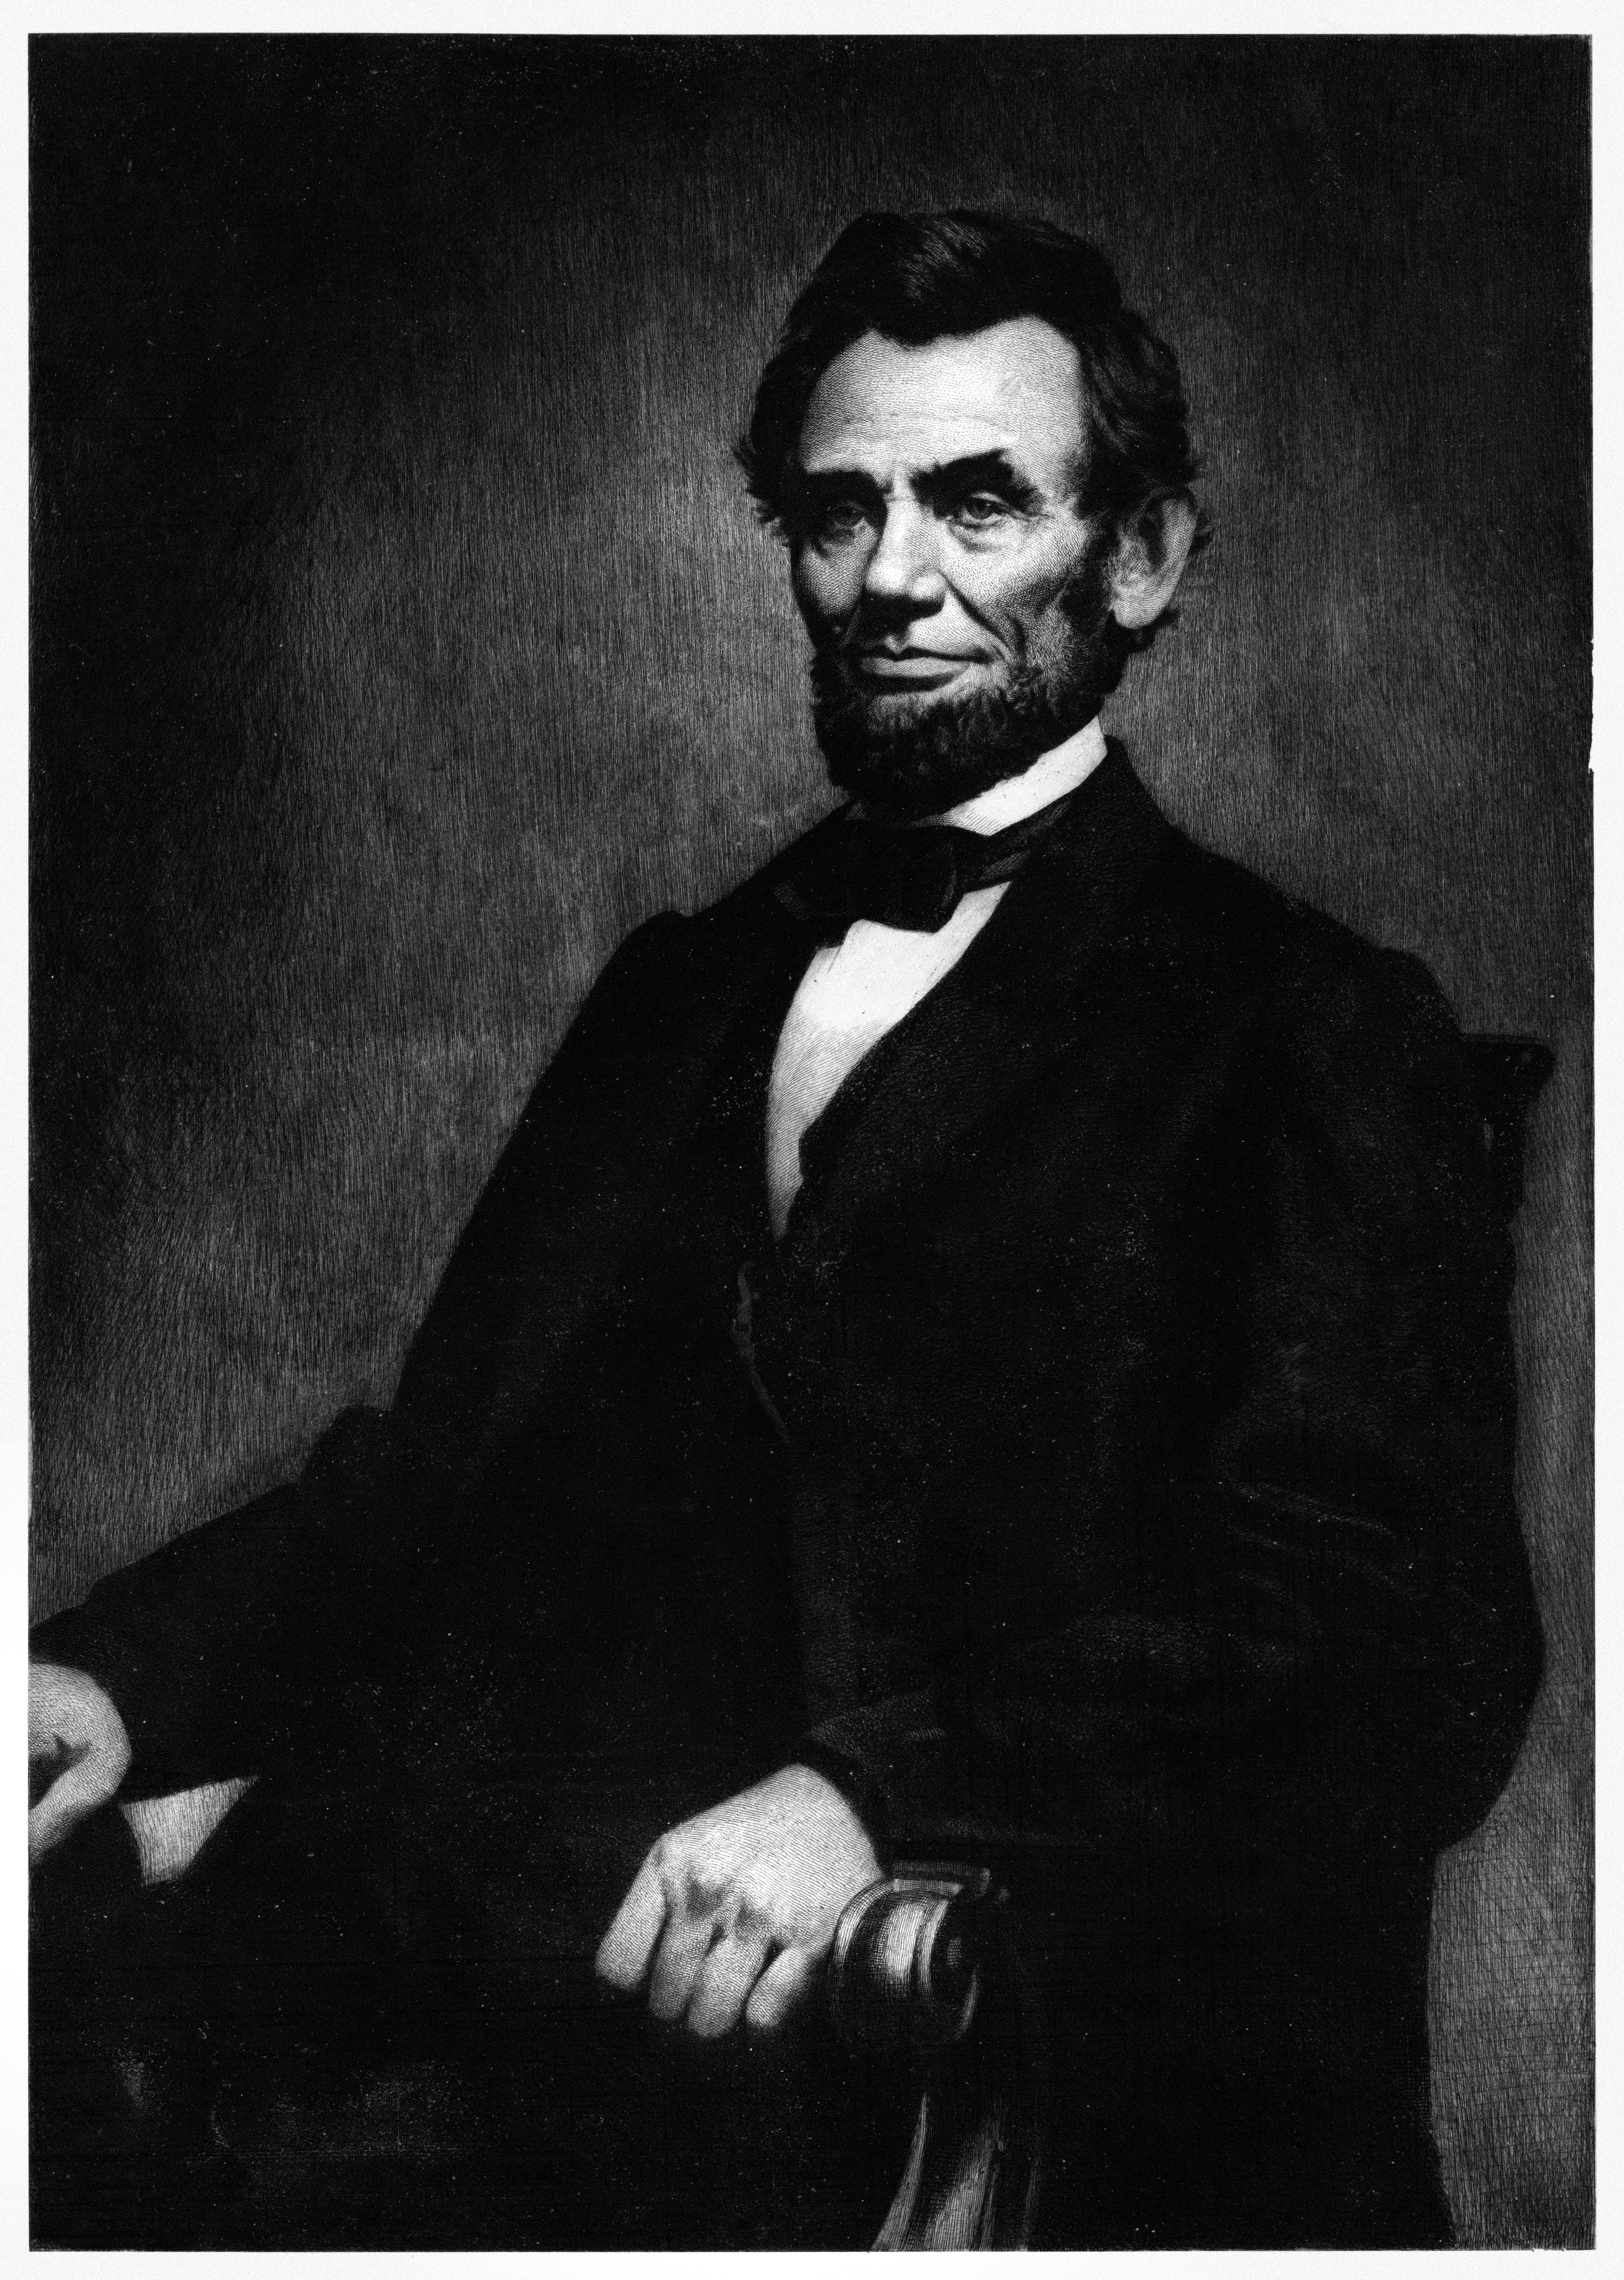 Abe Lincoln sitting